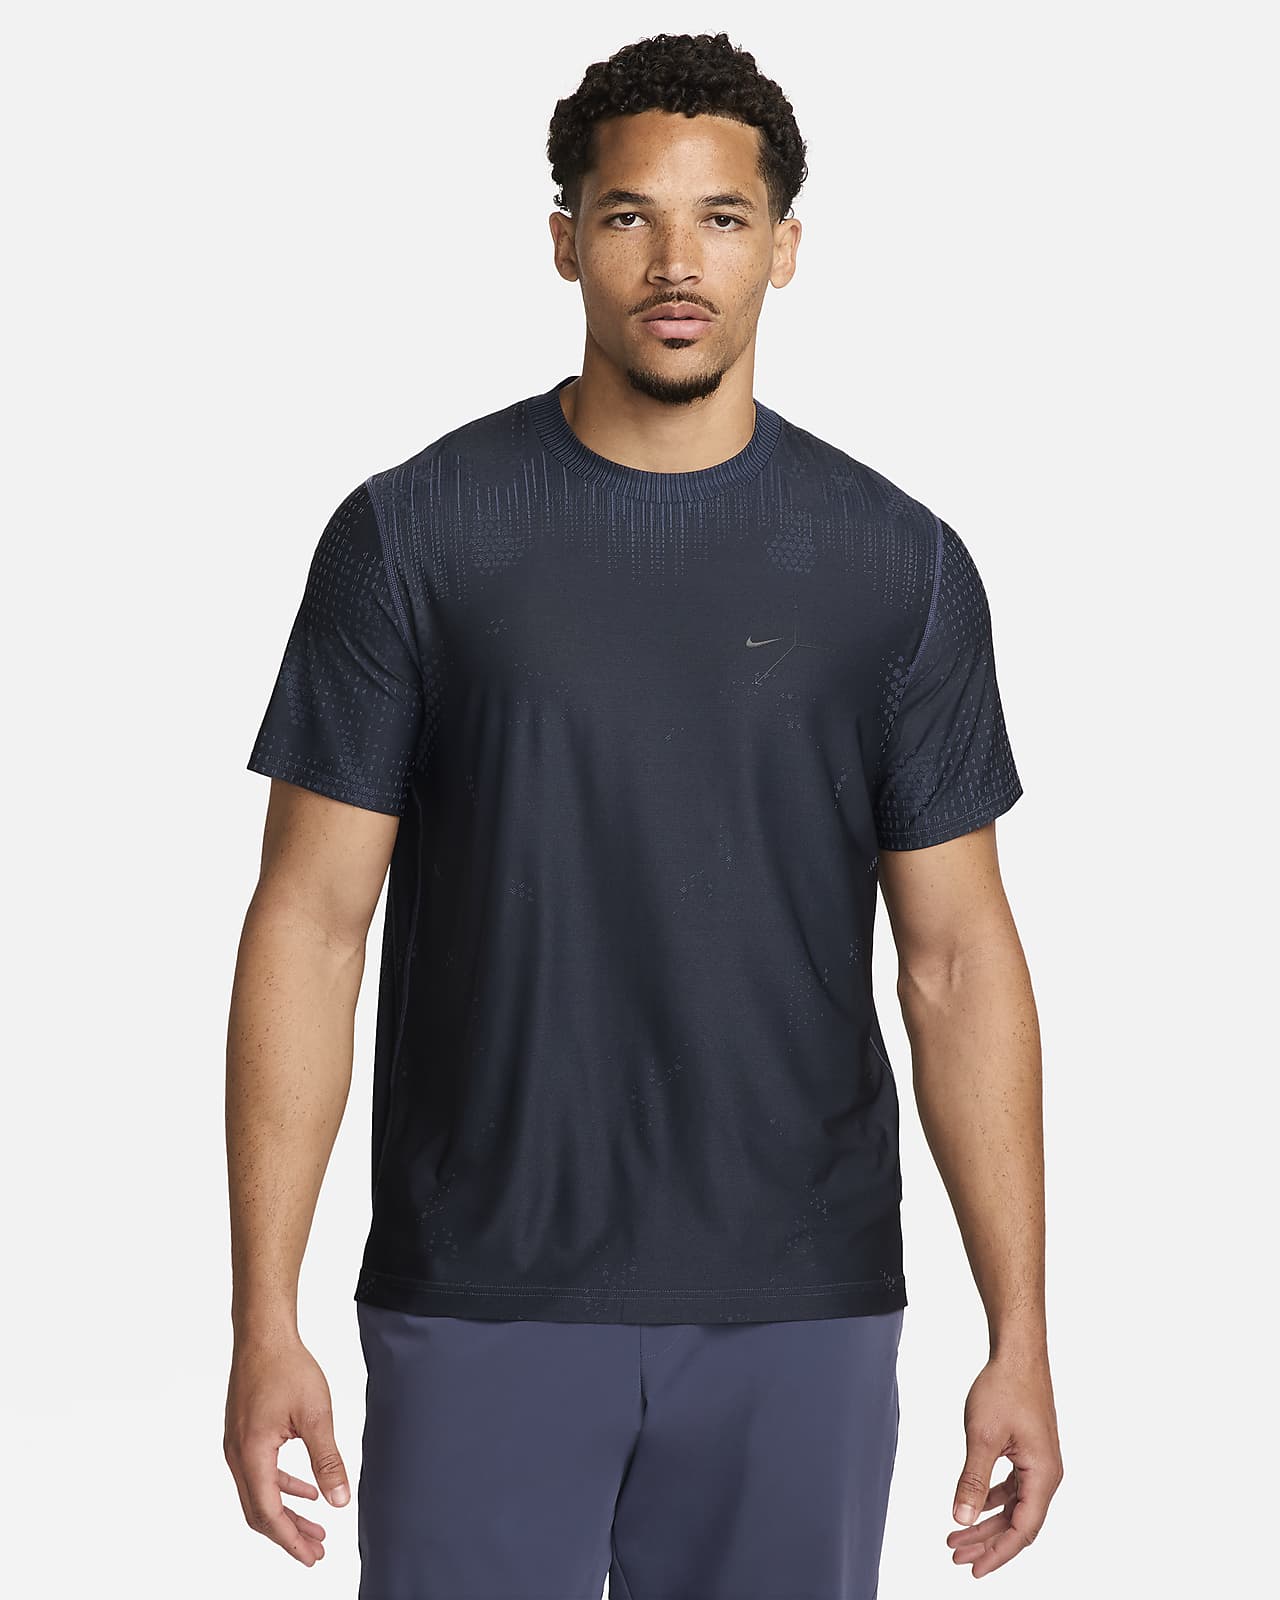 Nike A.P.S. Camiseta de manga corta Dri-FIT versátil con protección ADV - Hombre